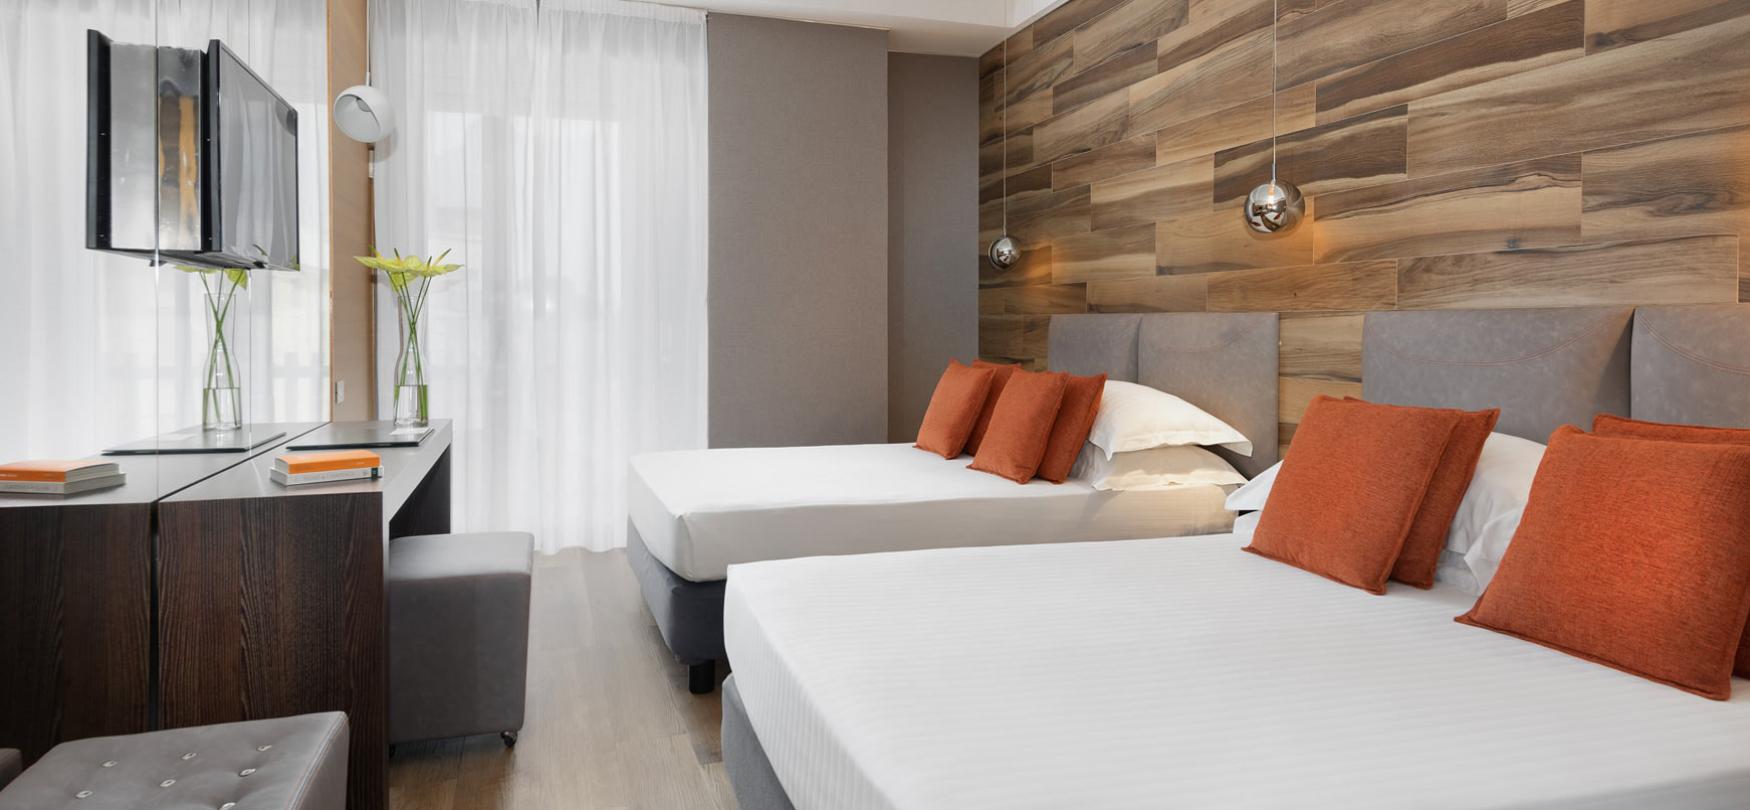 ambienthotels en rooms-bio-boutique-hotel-xu 004